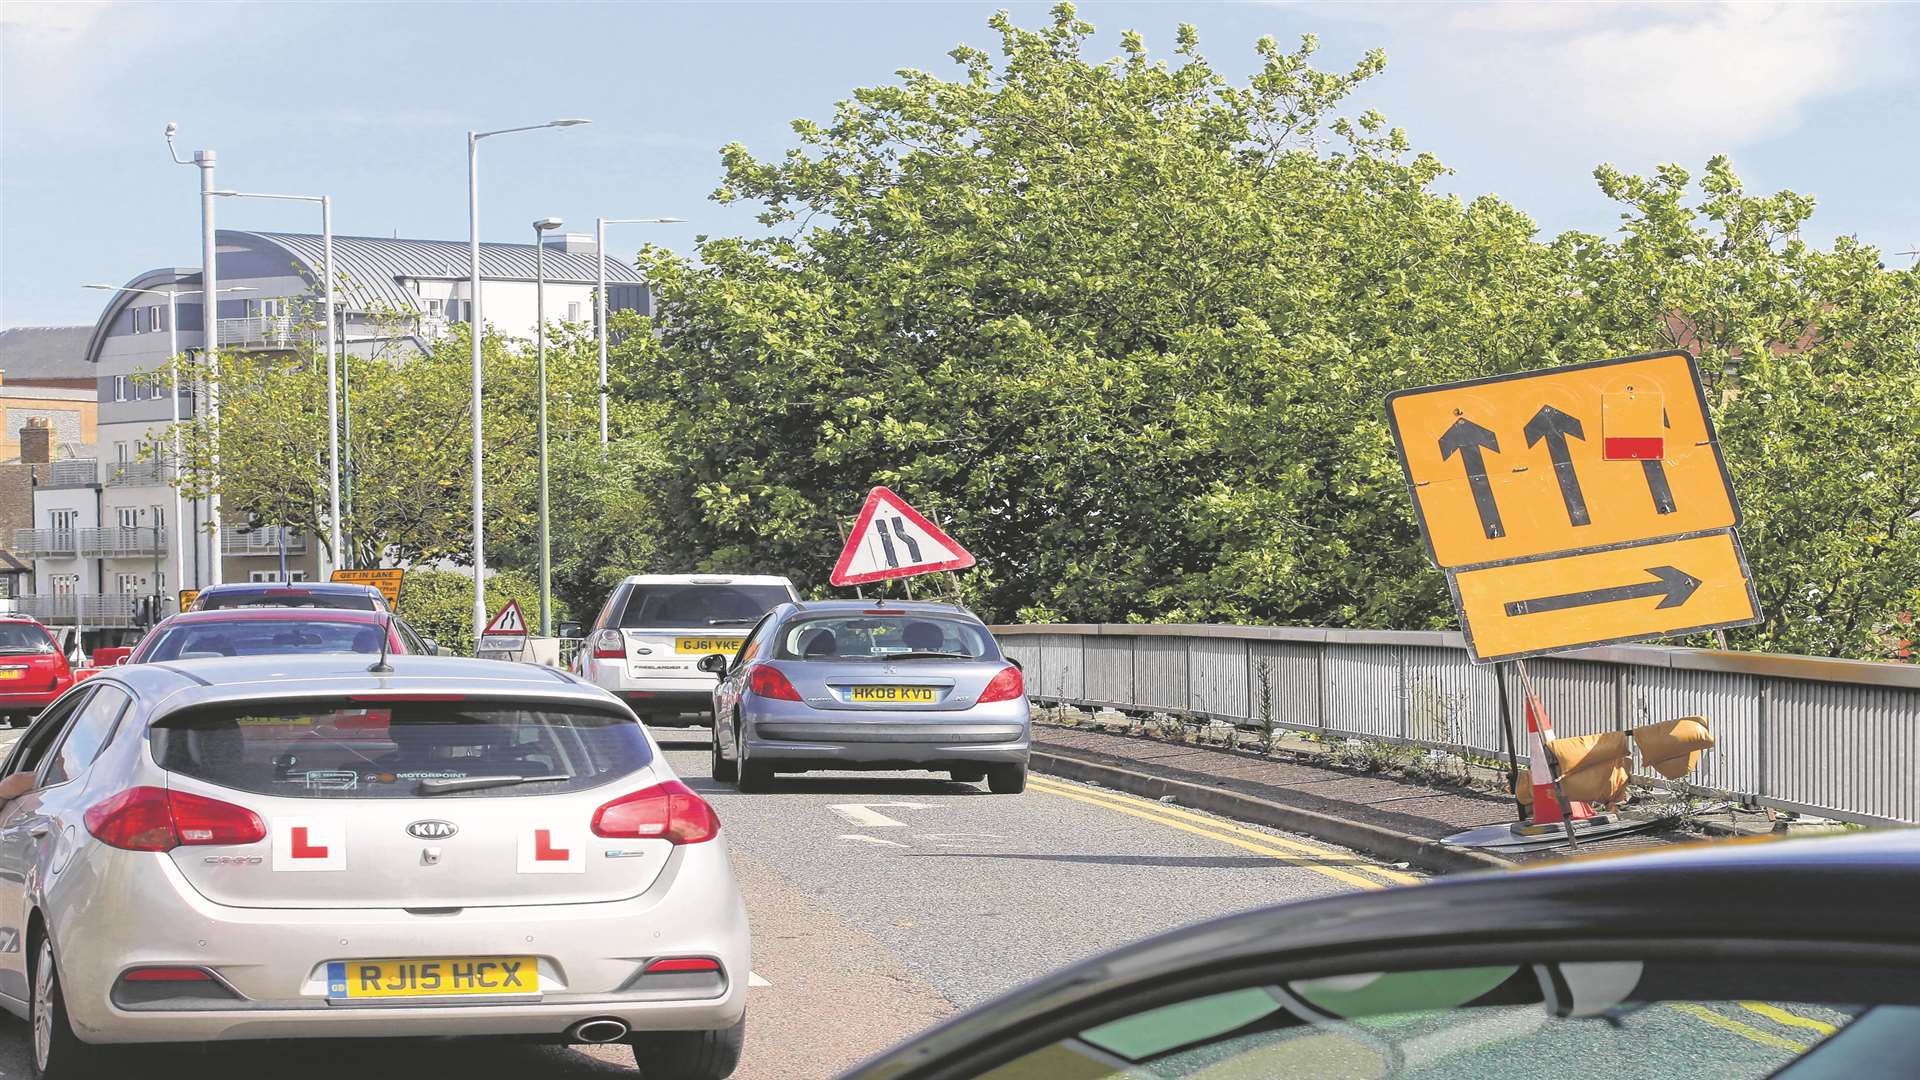 Cars negotiate the roadworks on St Peter's bridge. Picture: John Westhrop